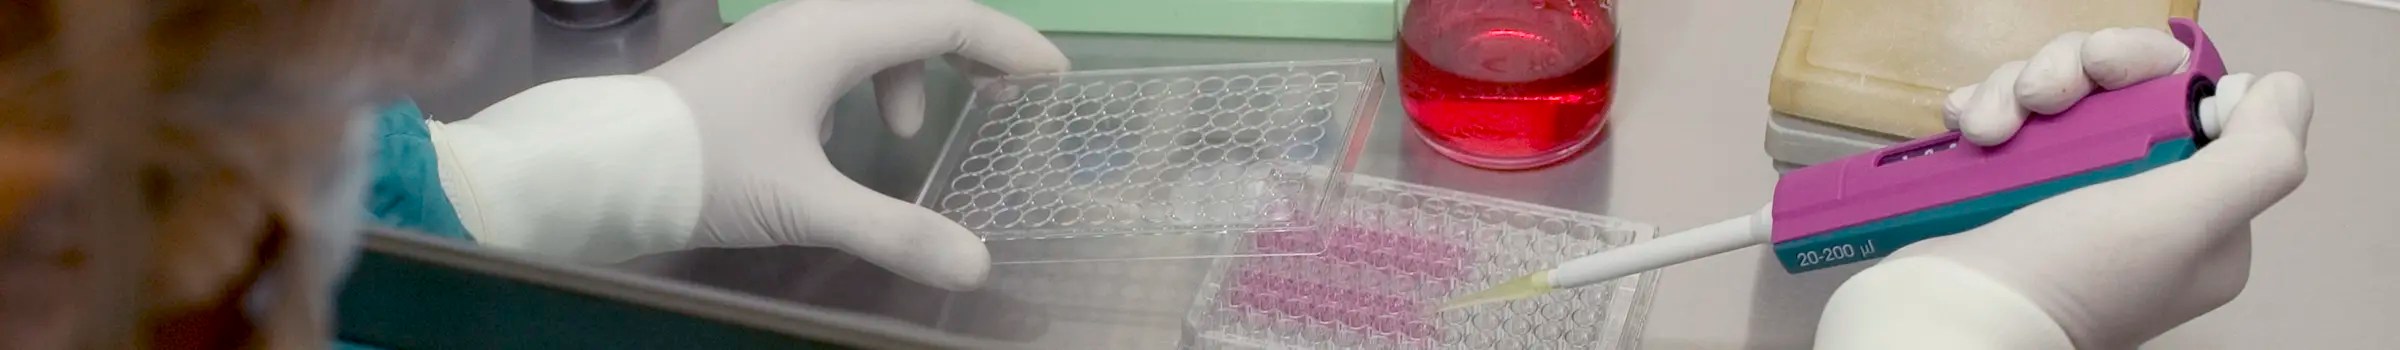 forensic science lab samples